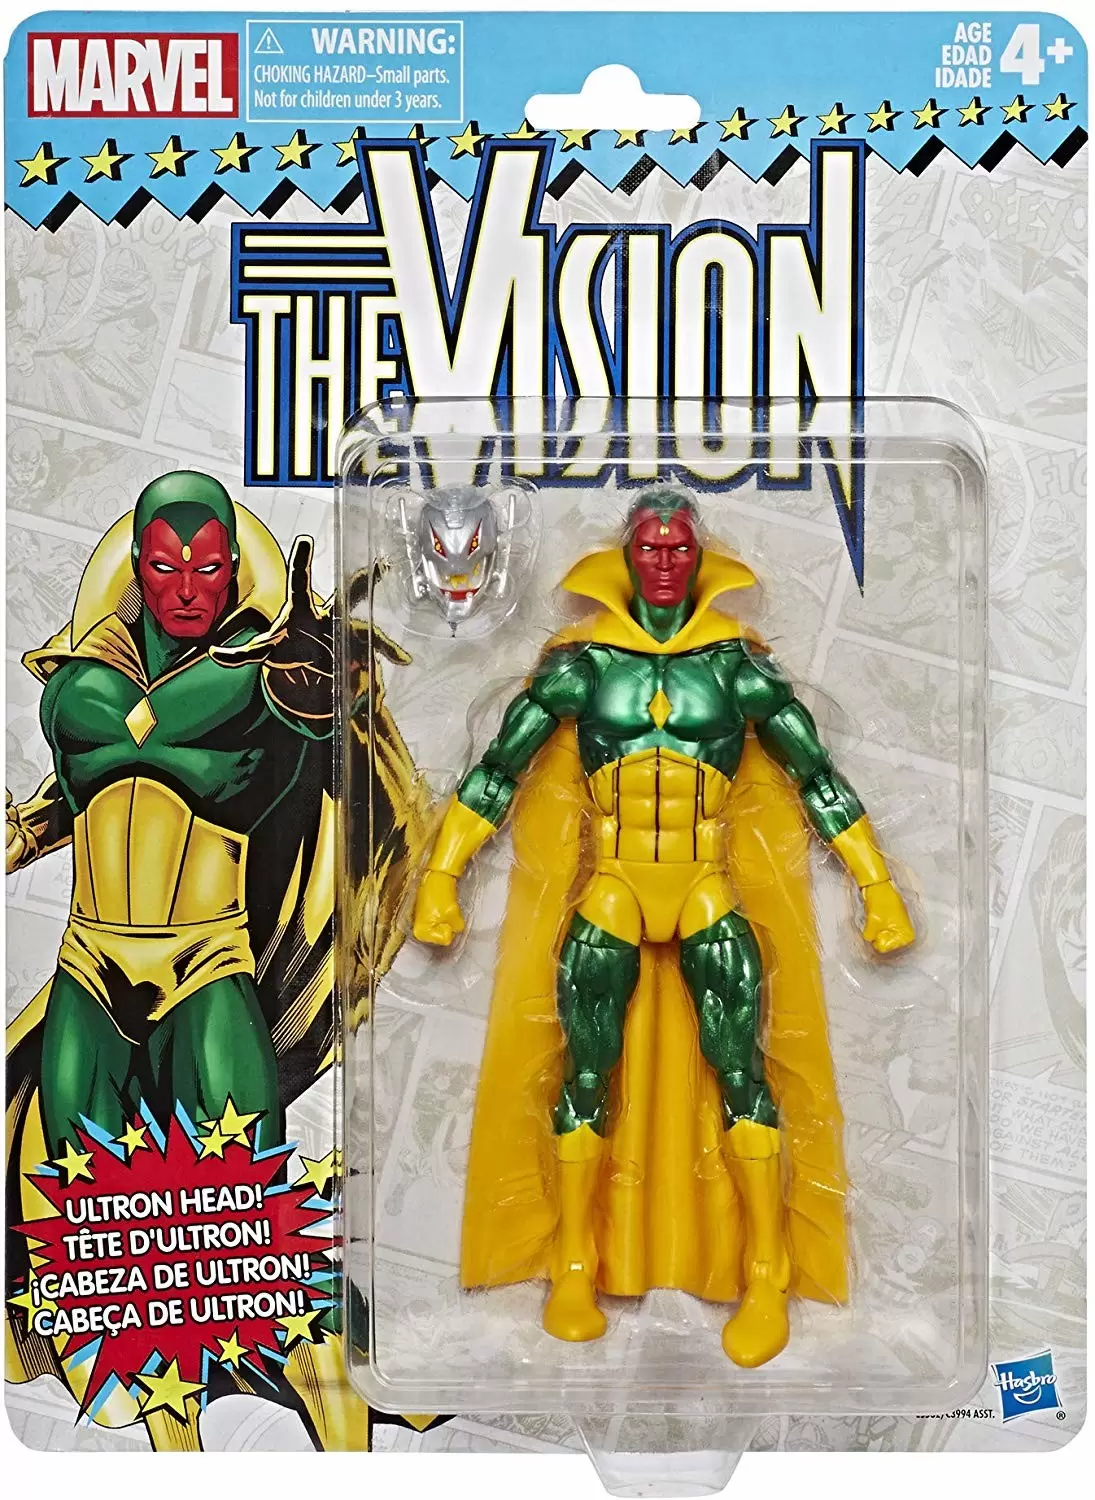 Marvel Retro Collection - Vision